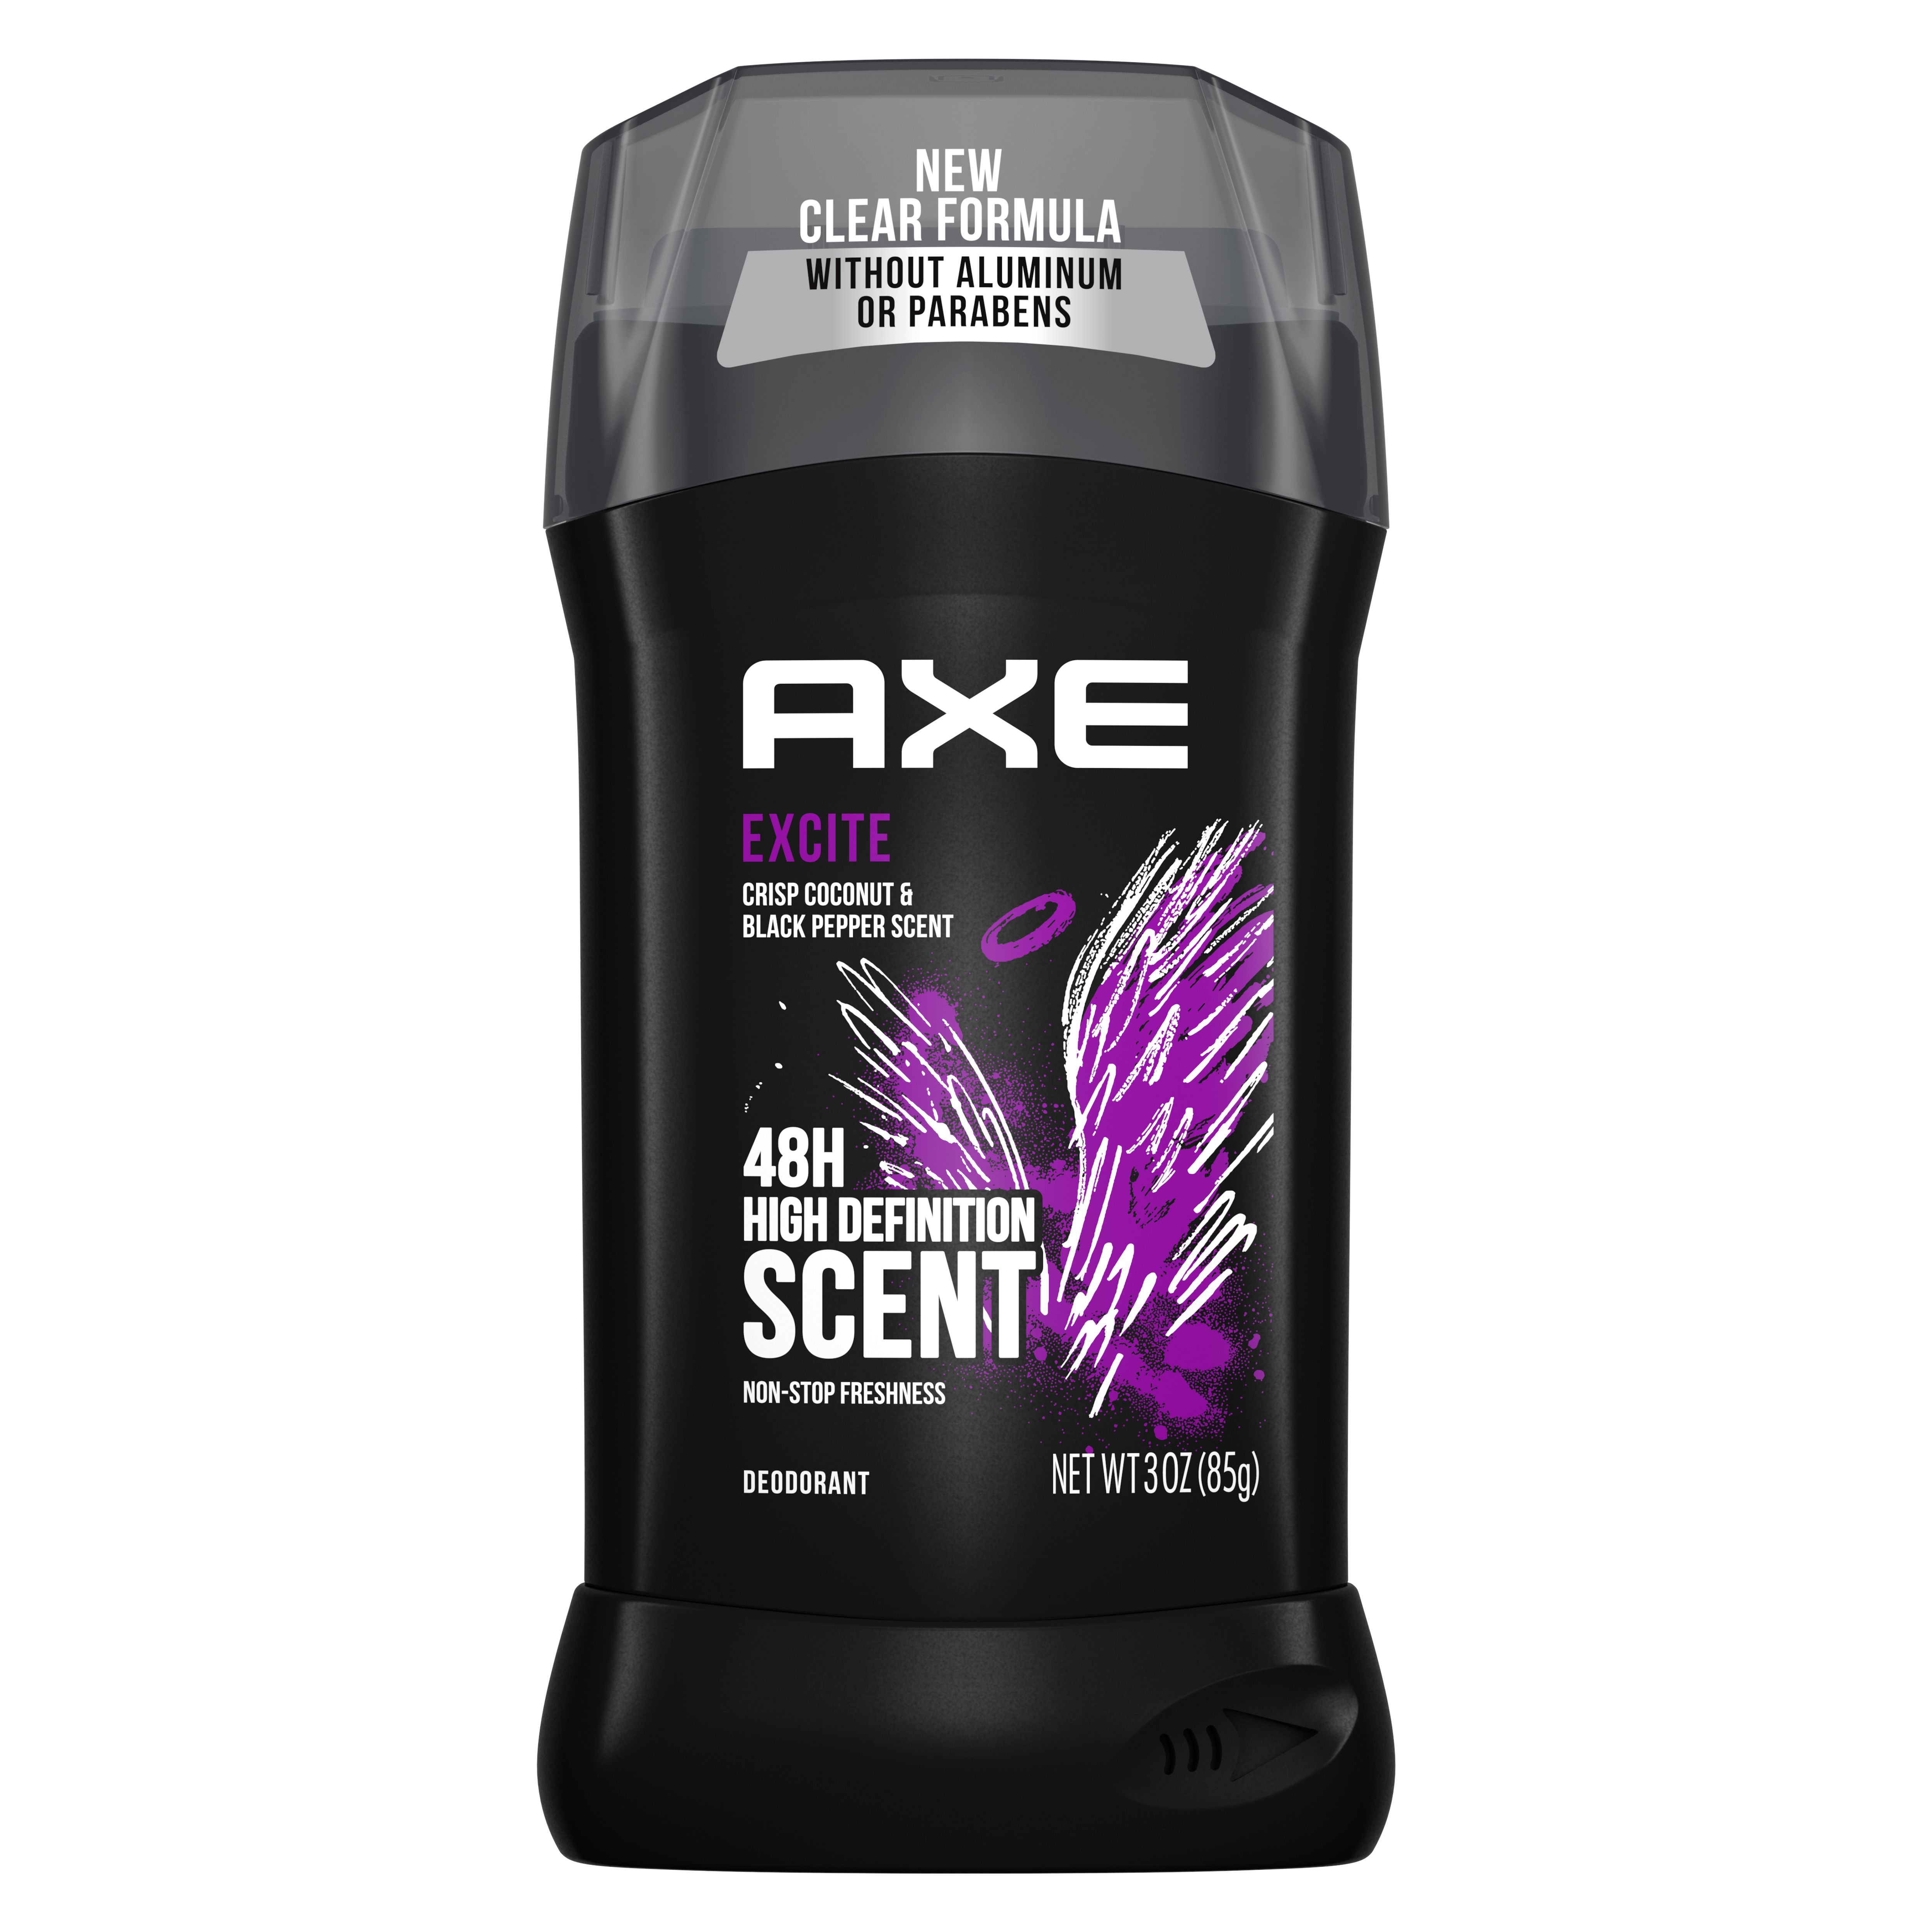 Axe, 48H High Definition Scent, Deodorant, Excite, Crisp Coconut 